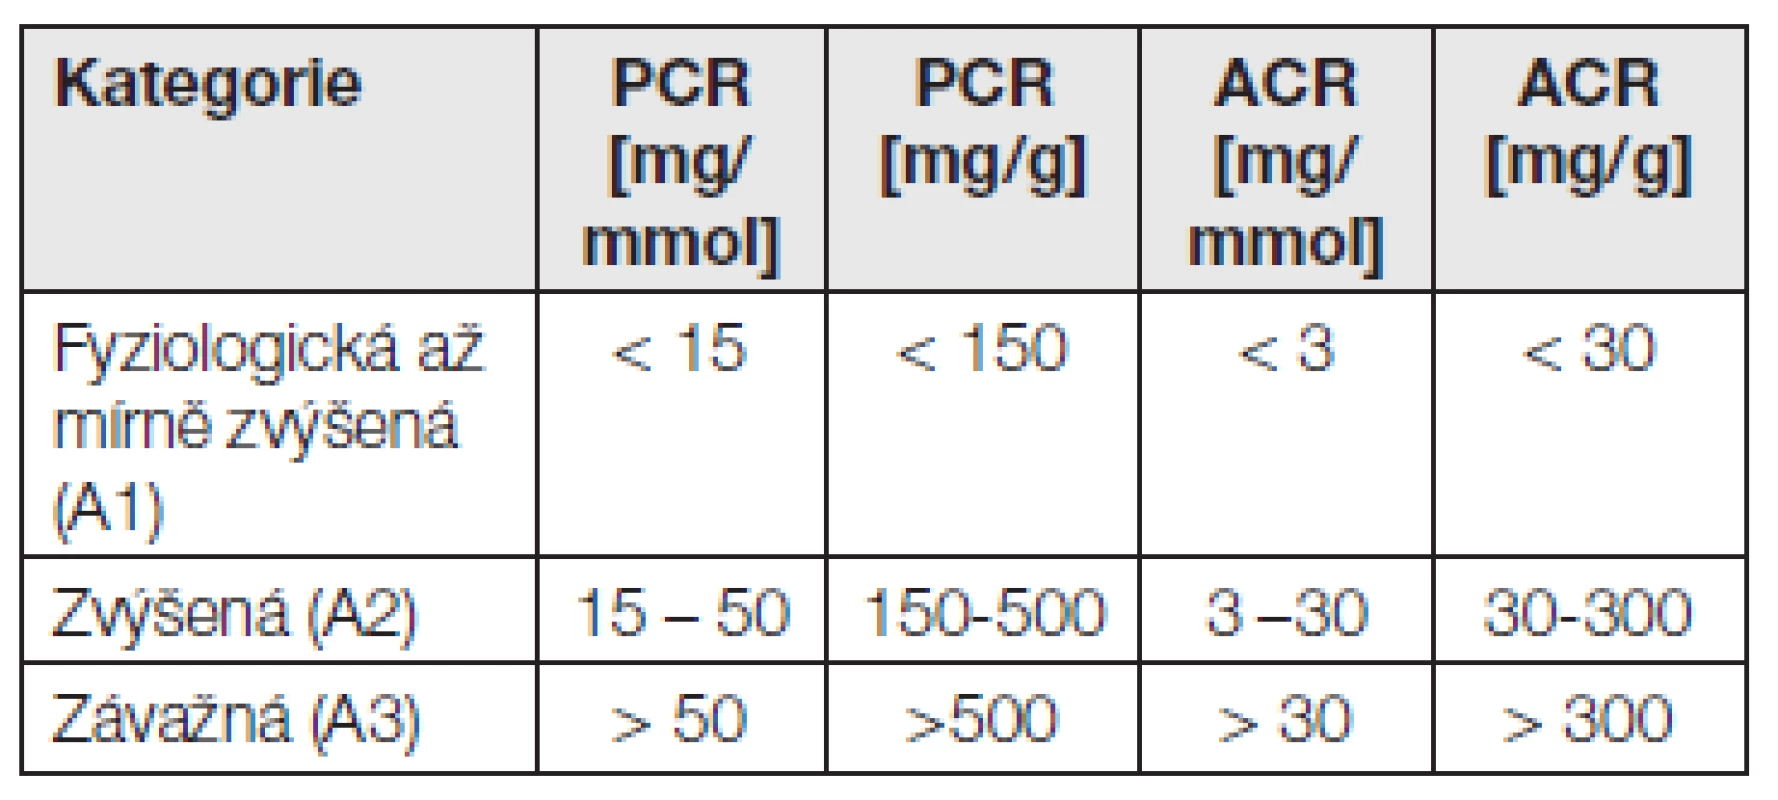 Klasifikace proteinurie a albuminurie dle KDIGO 2012. Porovnání s albuminurií a proteinurií za 24 h viz také Tabulka 1.